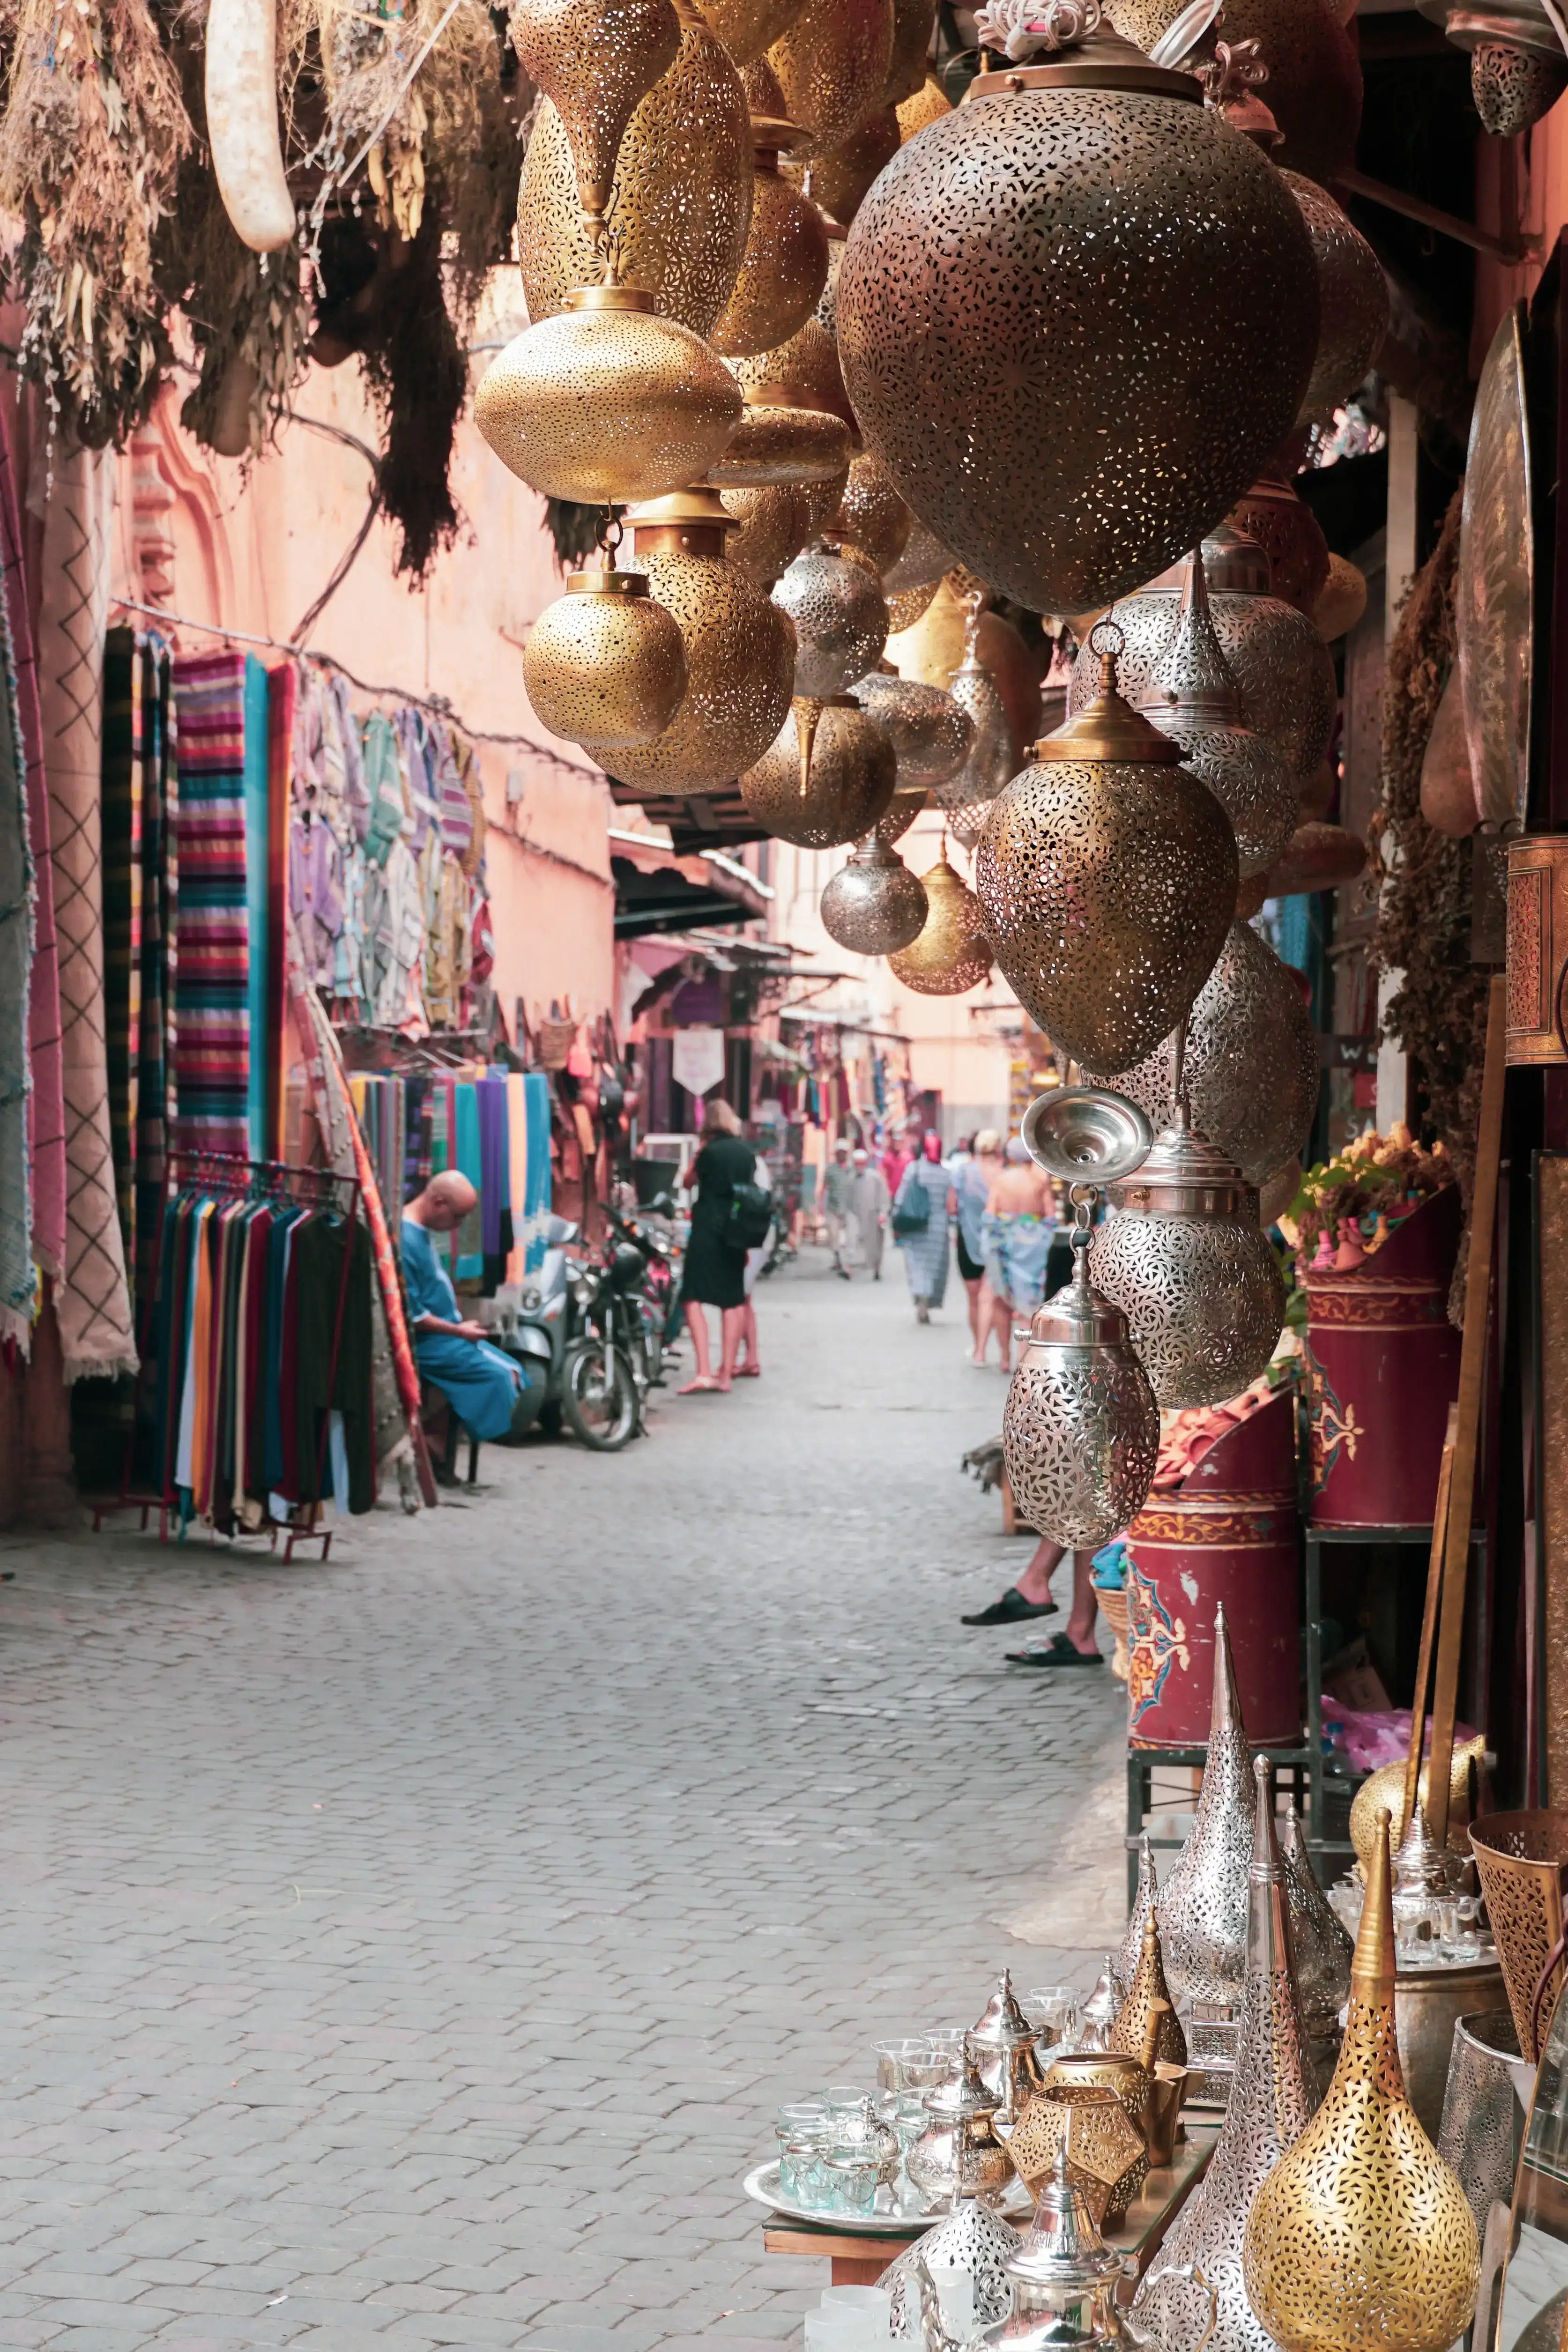 Souk in the medina of Marrakech